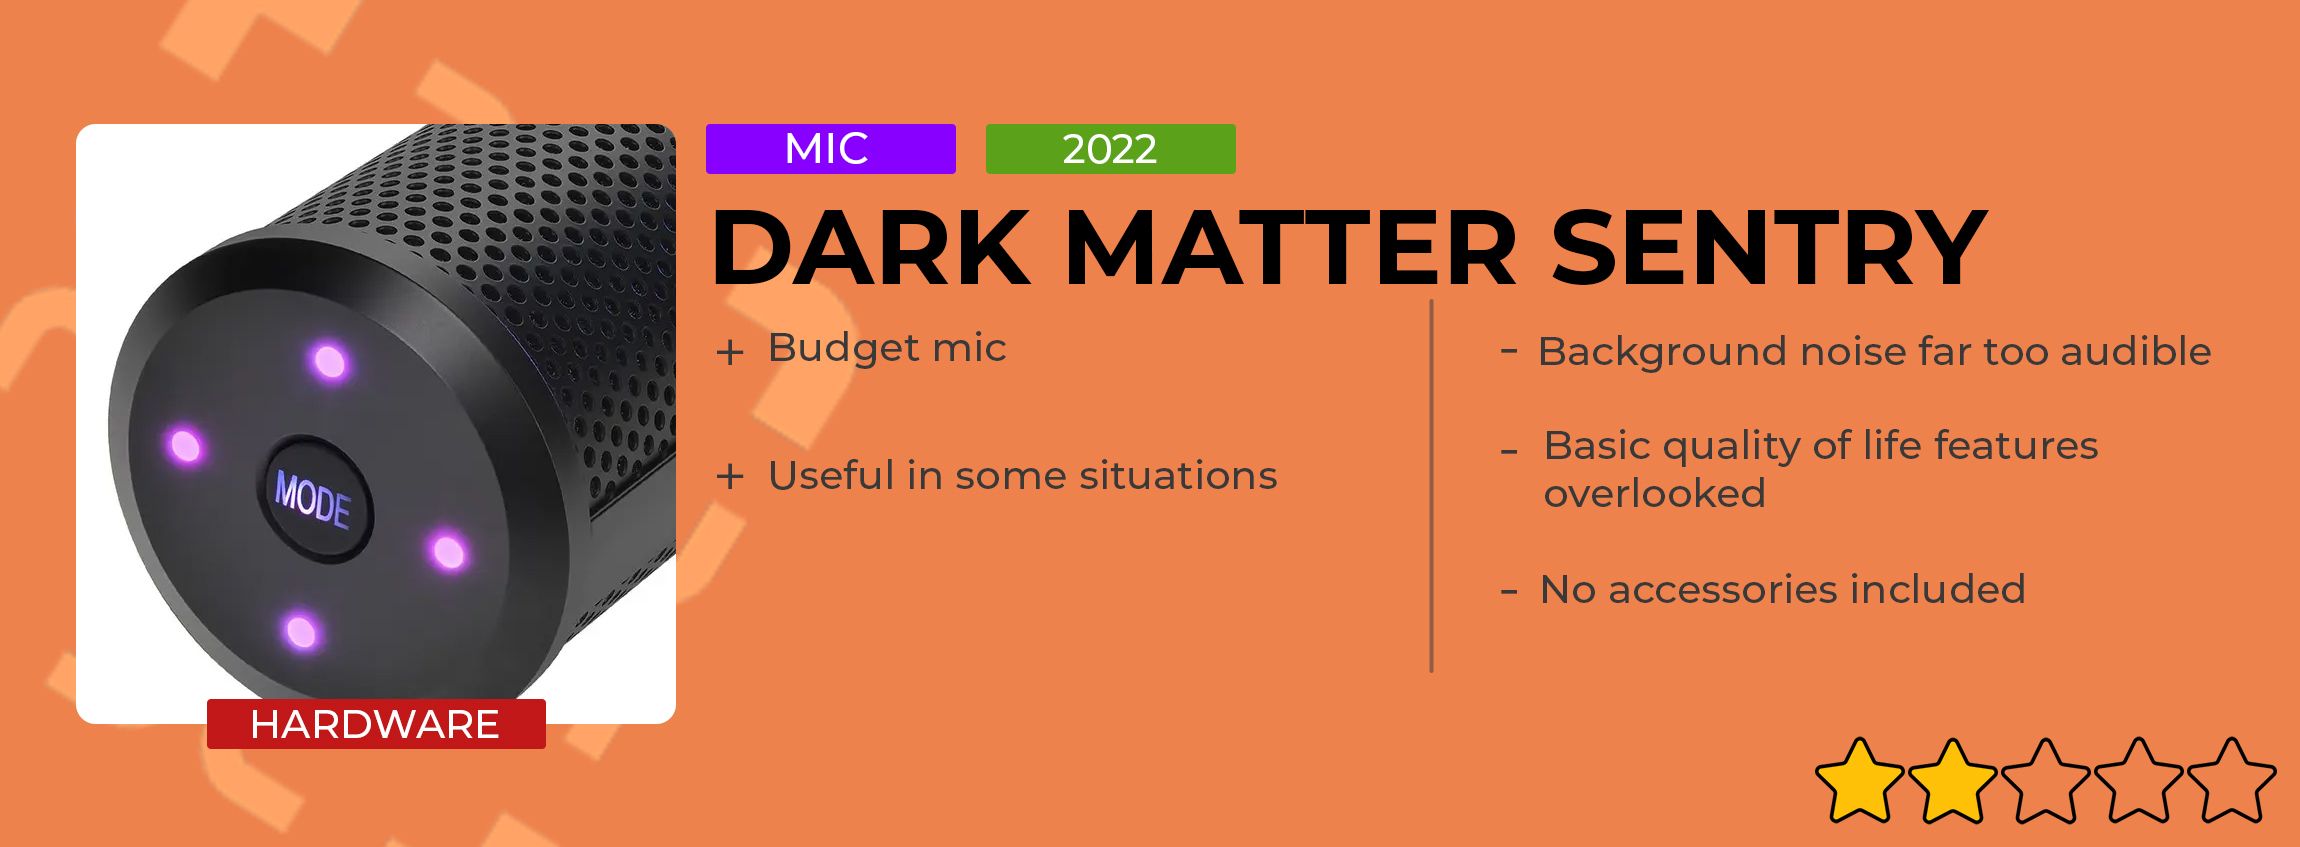 Monoprice Dark Matter Sentry Streaming Mic Review